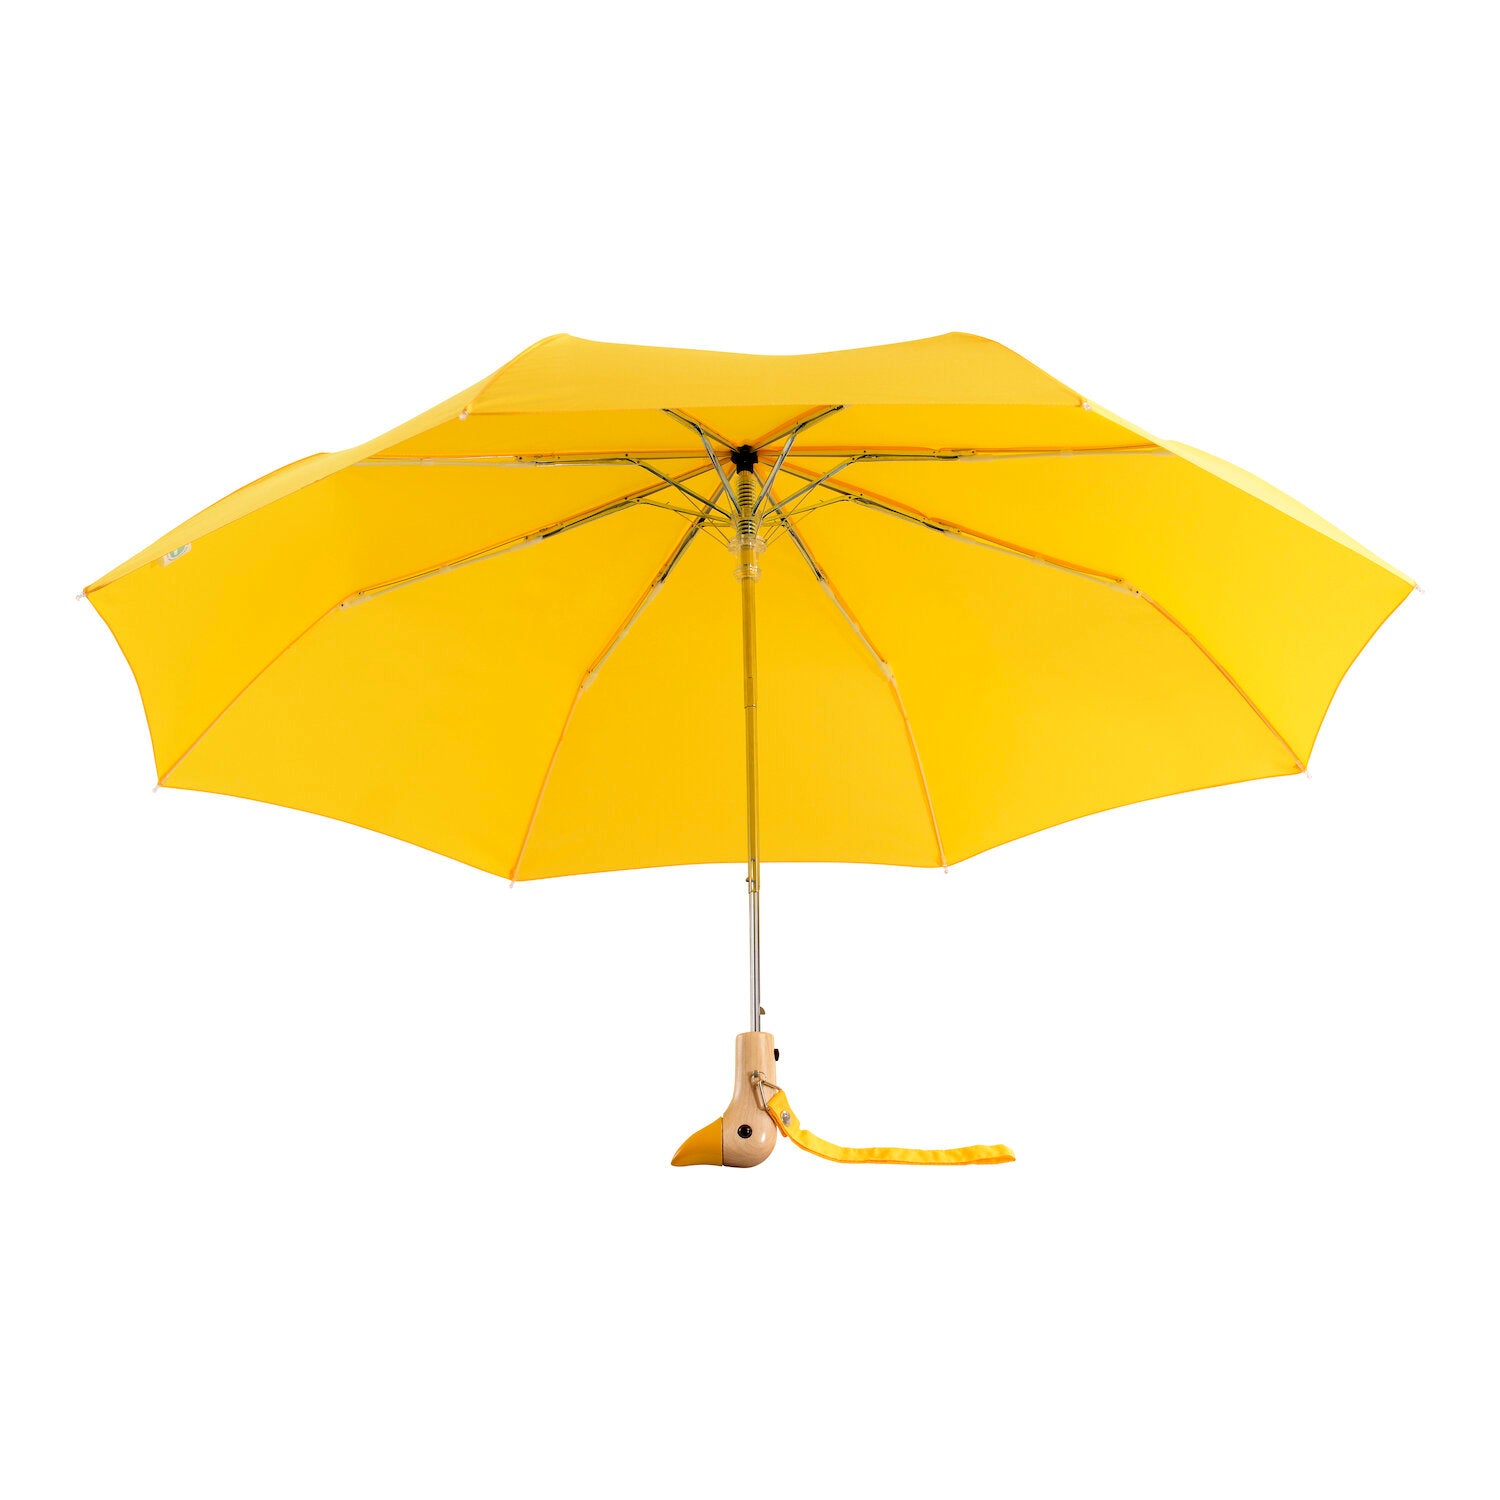 yellow duckhead umbrella full view